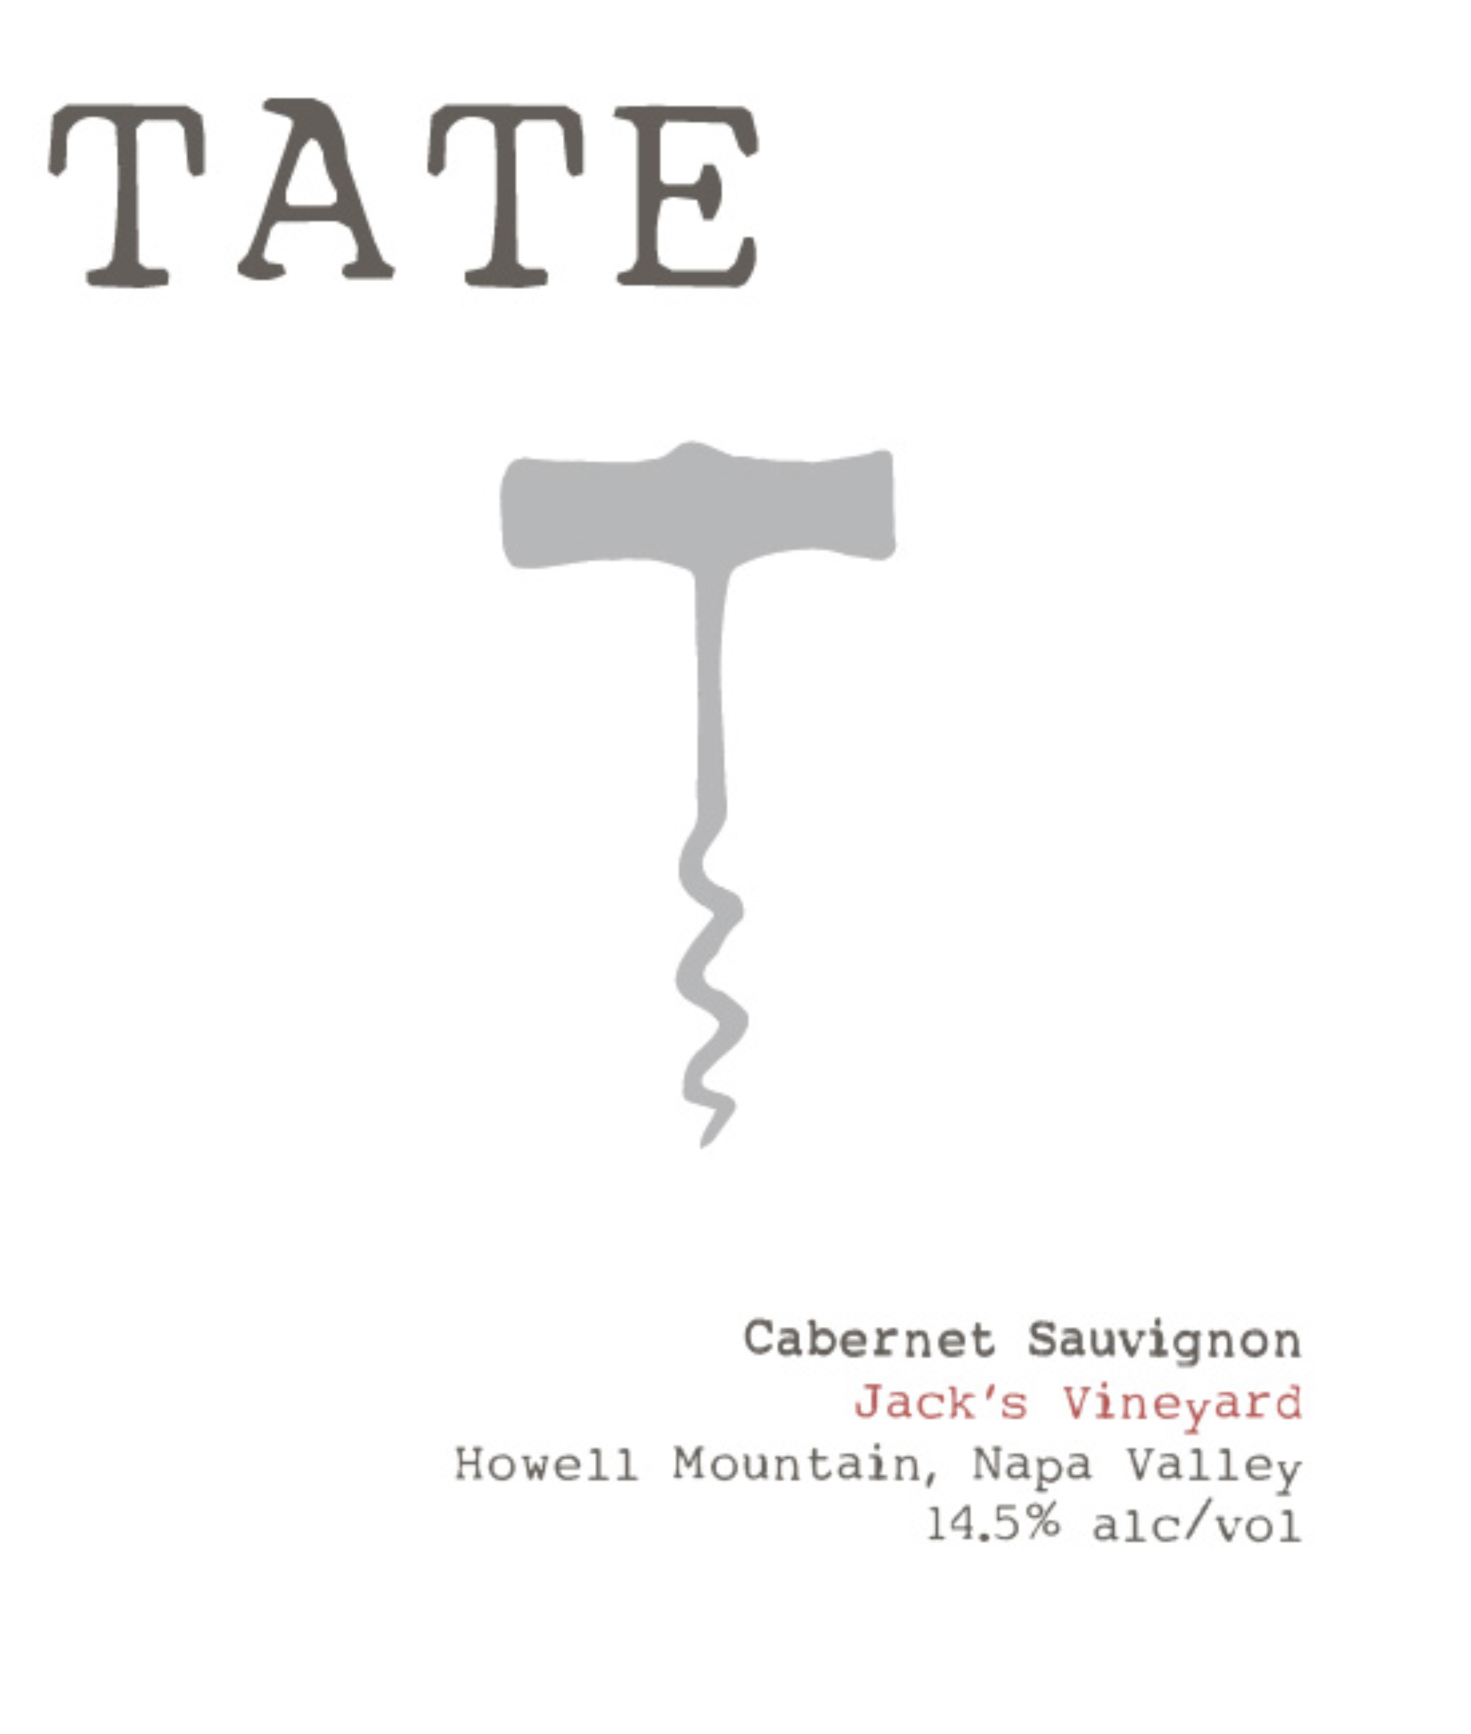 Tate Wine - Cabernet Sauvignon - Jack's Vineyard label